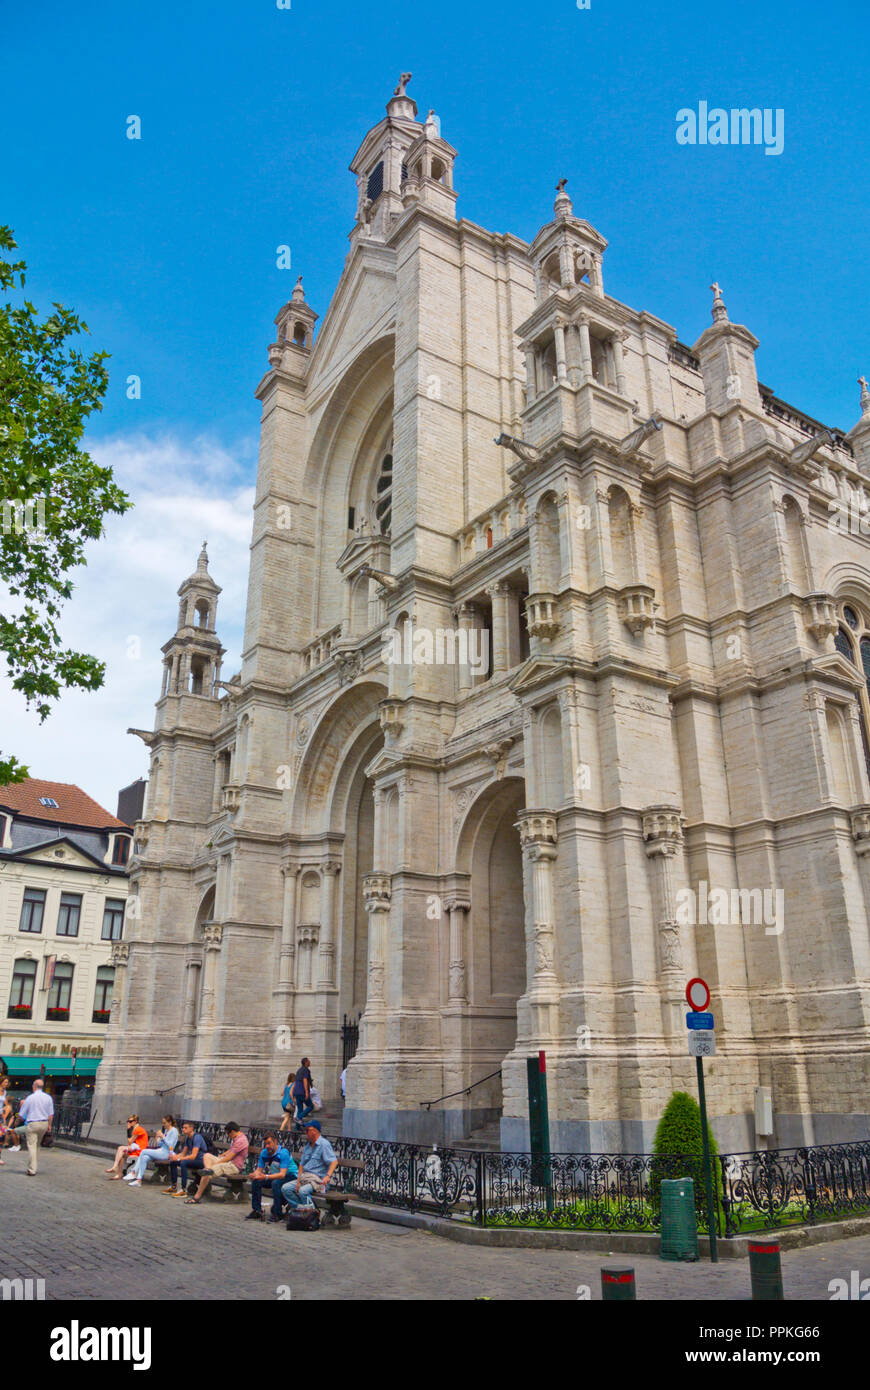 Eglise Sainte-Catherine, Place Sainte-Catherine, Brussels, Belgium Stock Photo